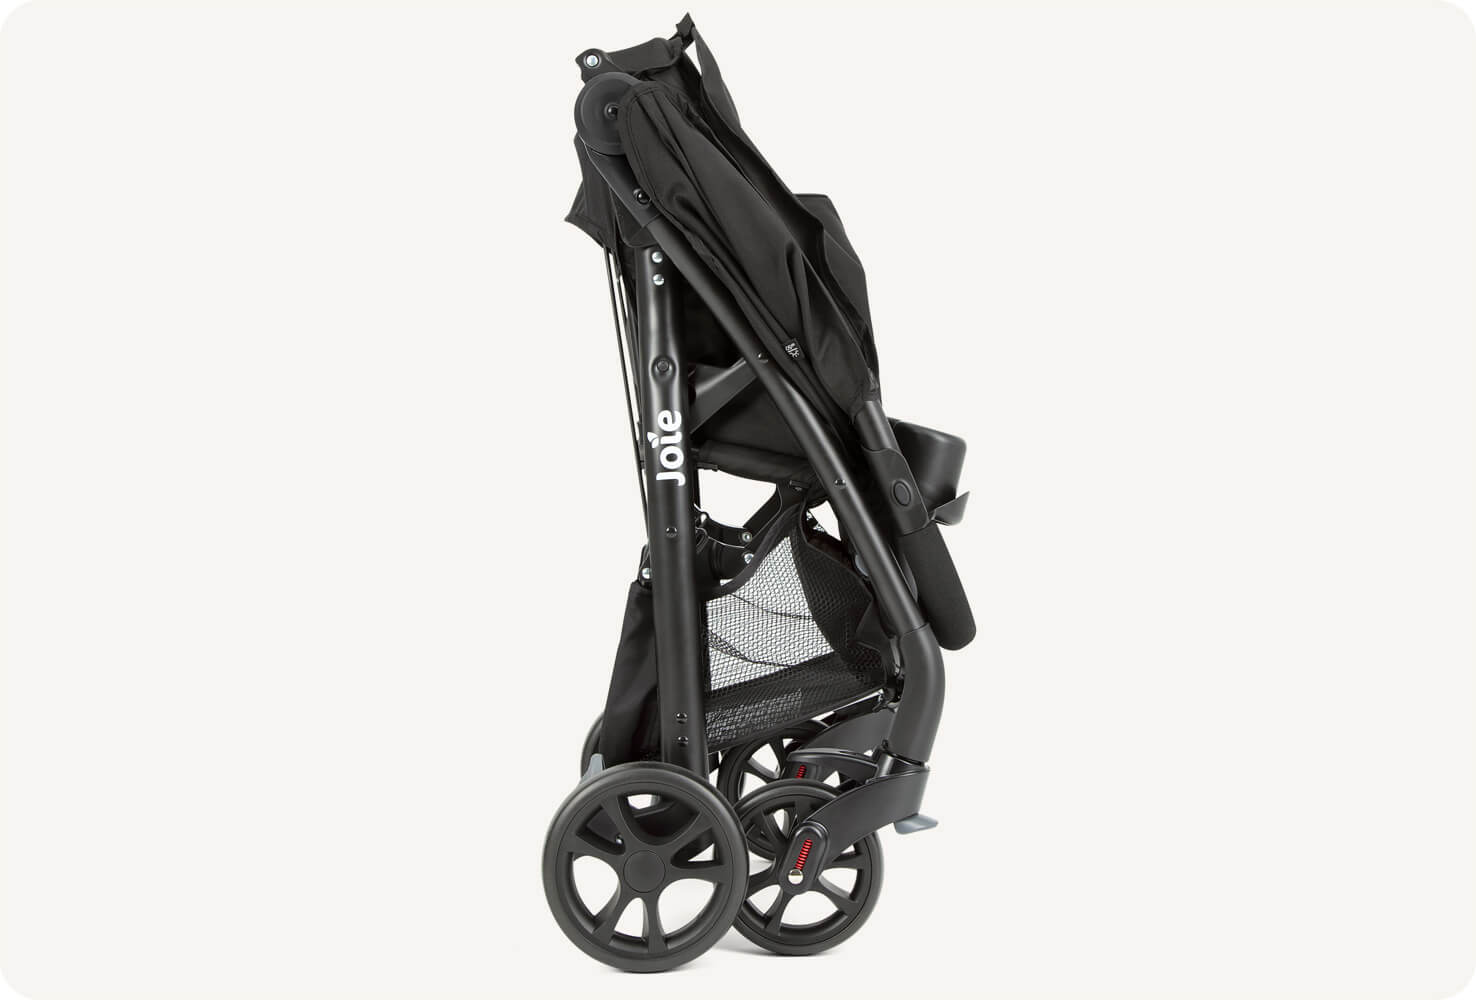  Joie i-Muze lx travel system pushchair in black folded.